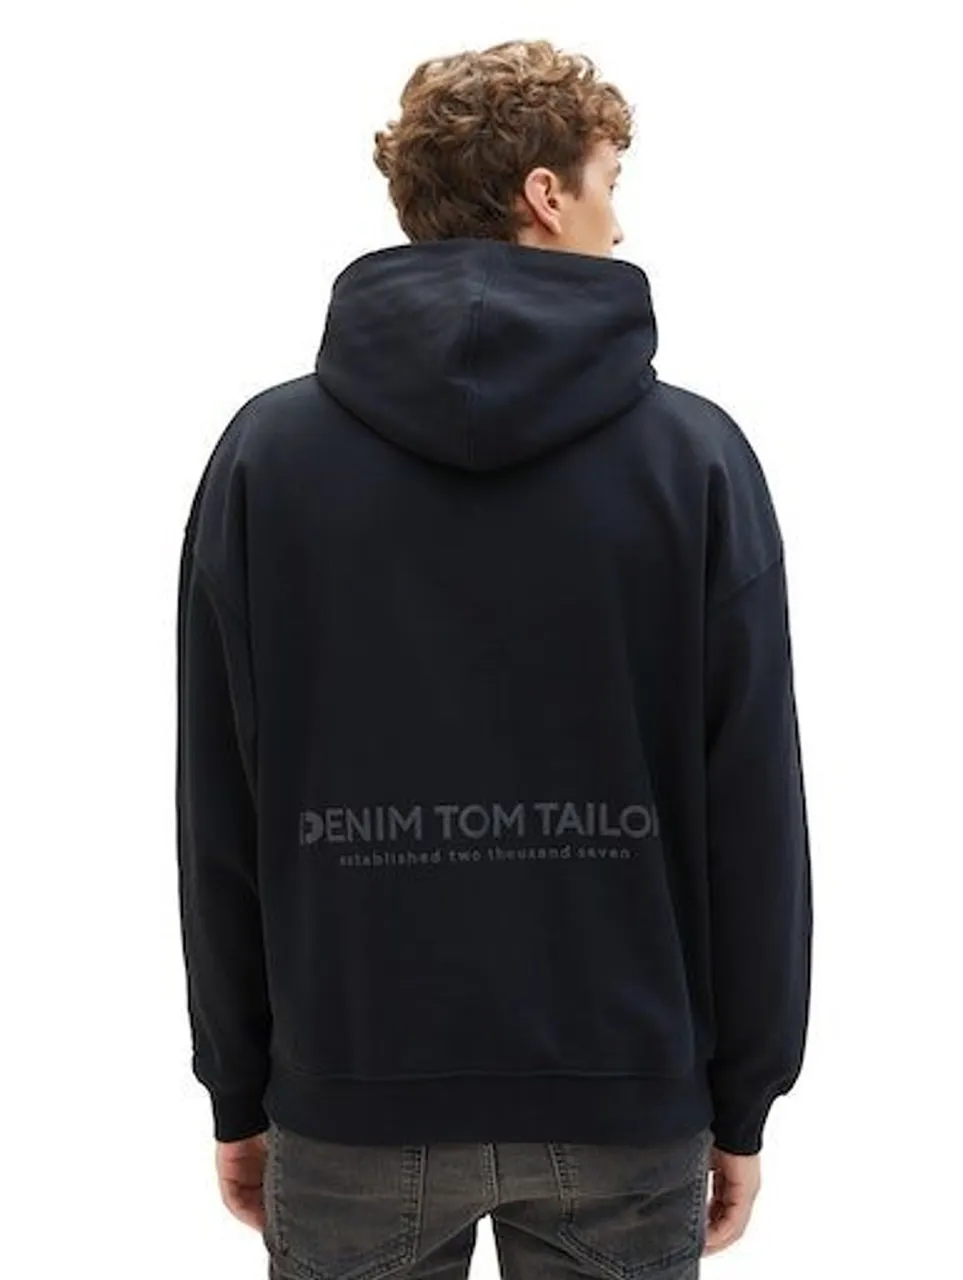 TOM TAILOR Denim Kapuzensweatshirt mit großem Logodruck